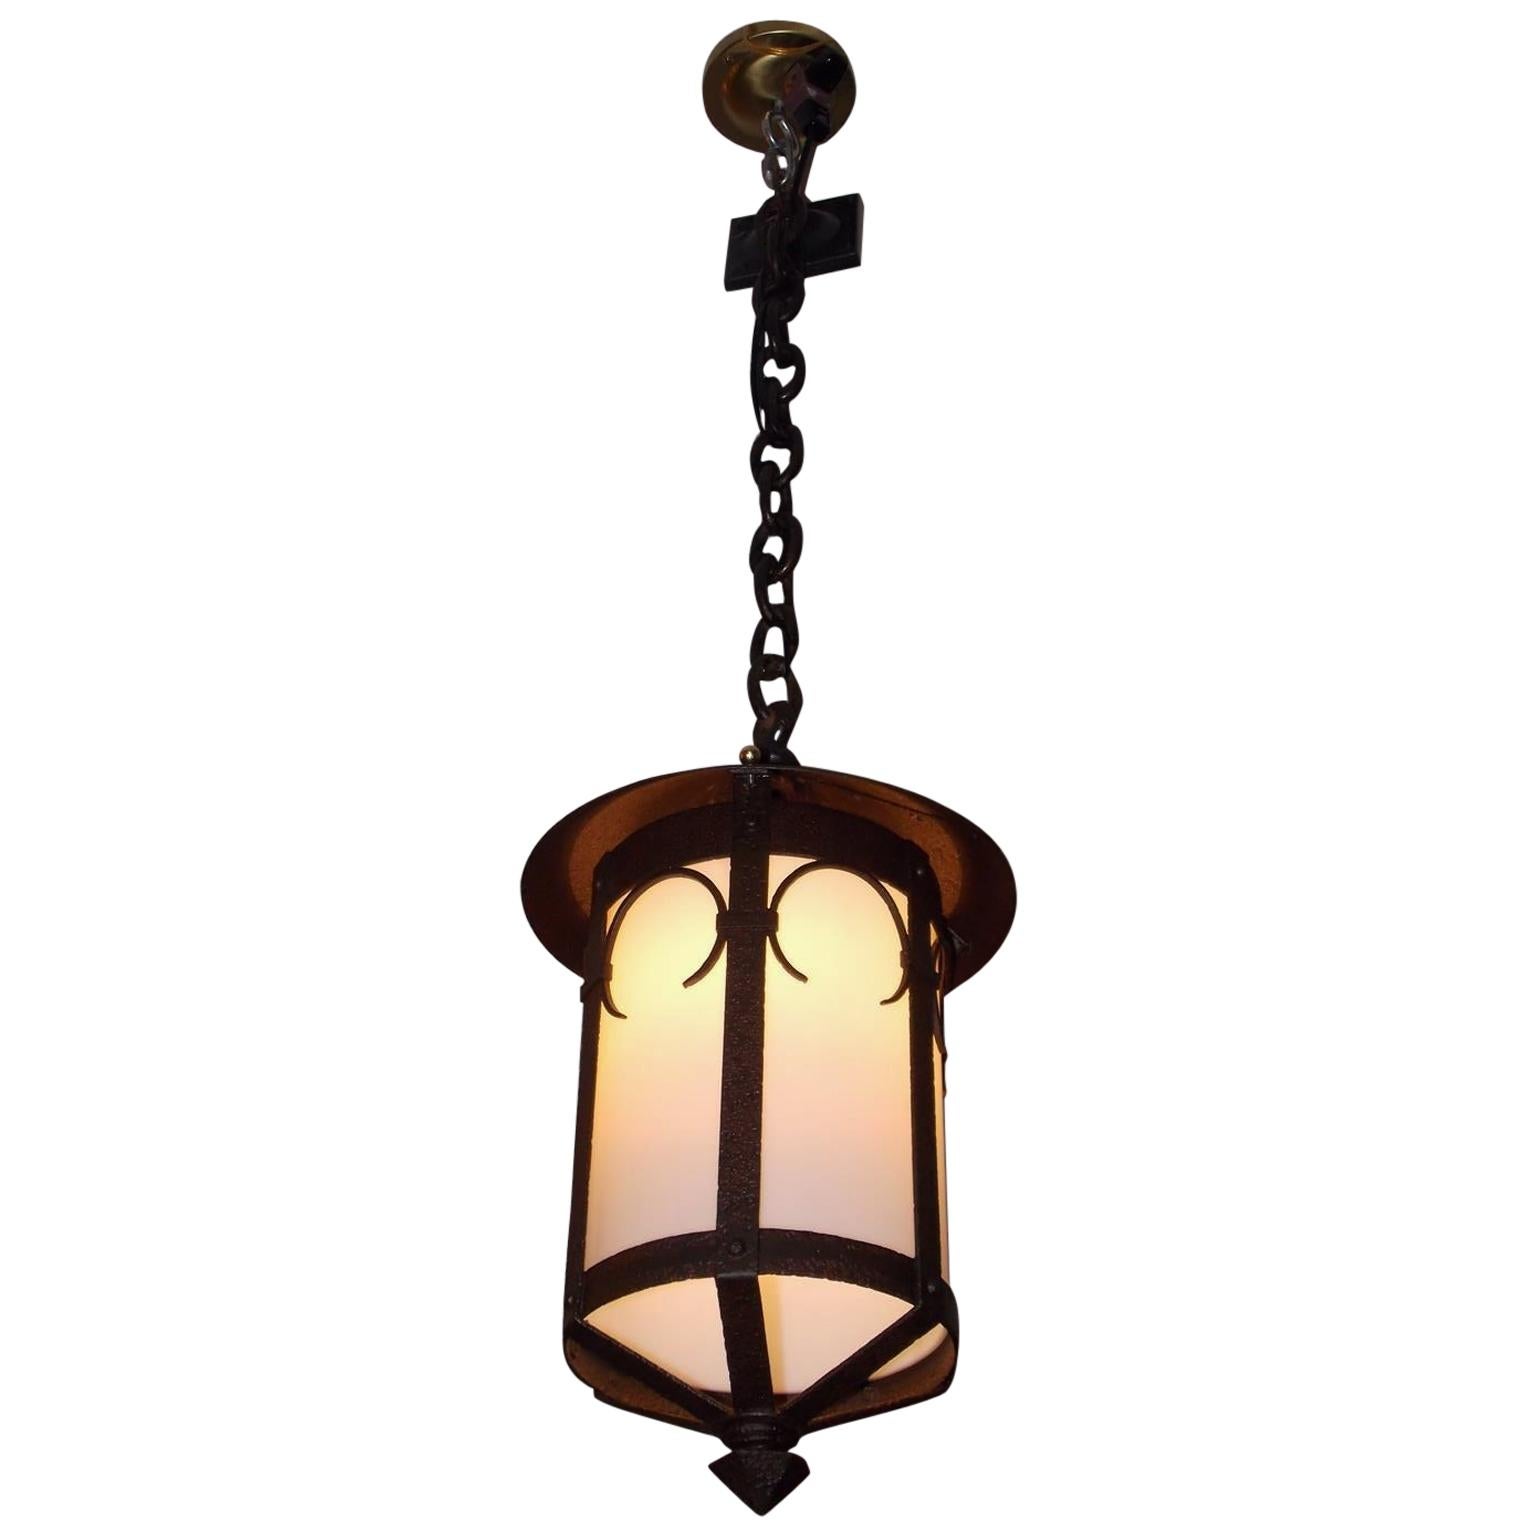 American Wrought Iron and Milk Glass Decorative Hanging Hall Lantern, Circa 1850